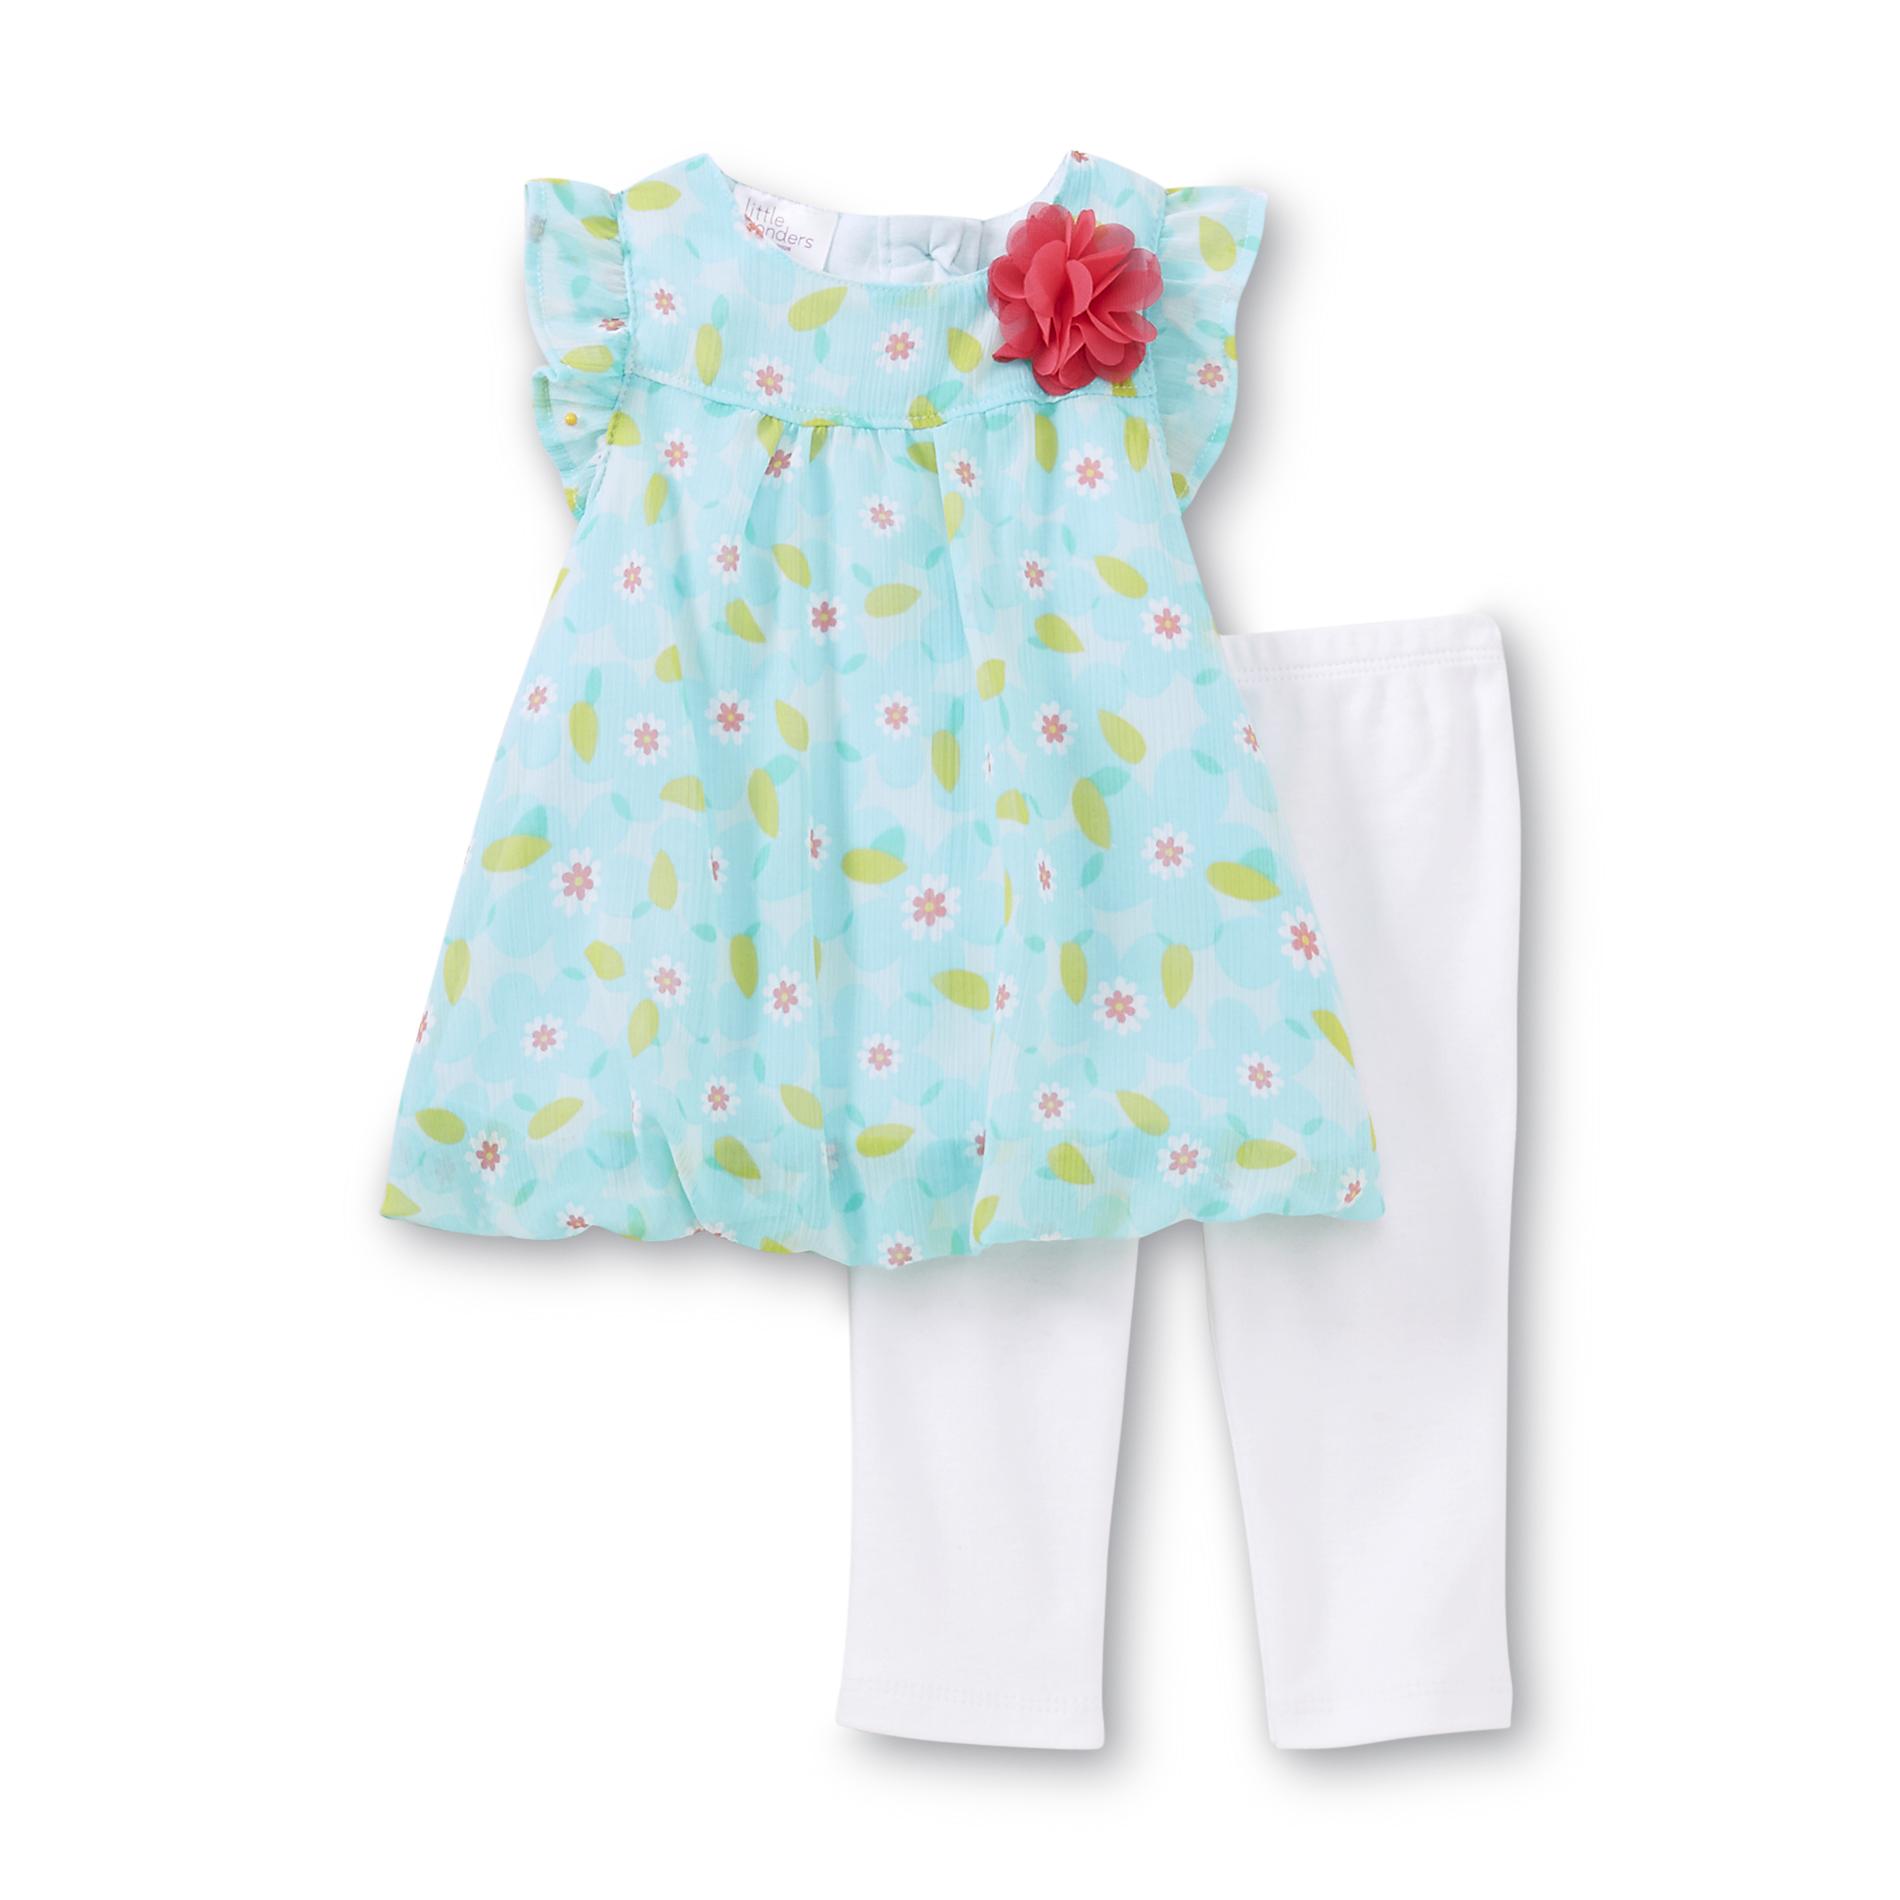 Little Wonders Newborn & Infant Girl's Chiffon Top & Leggings - Floral